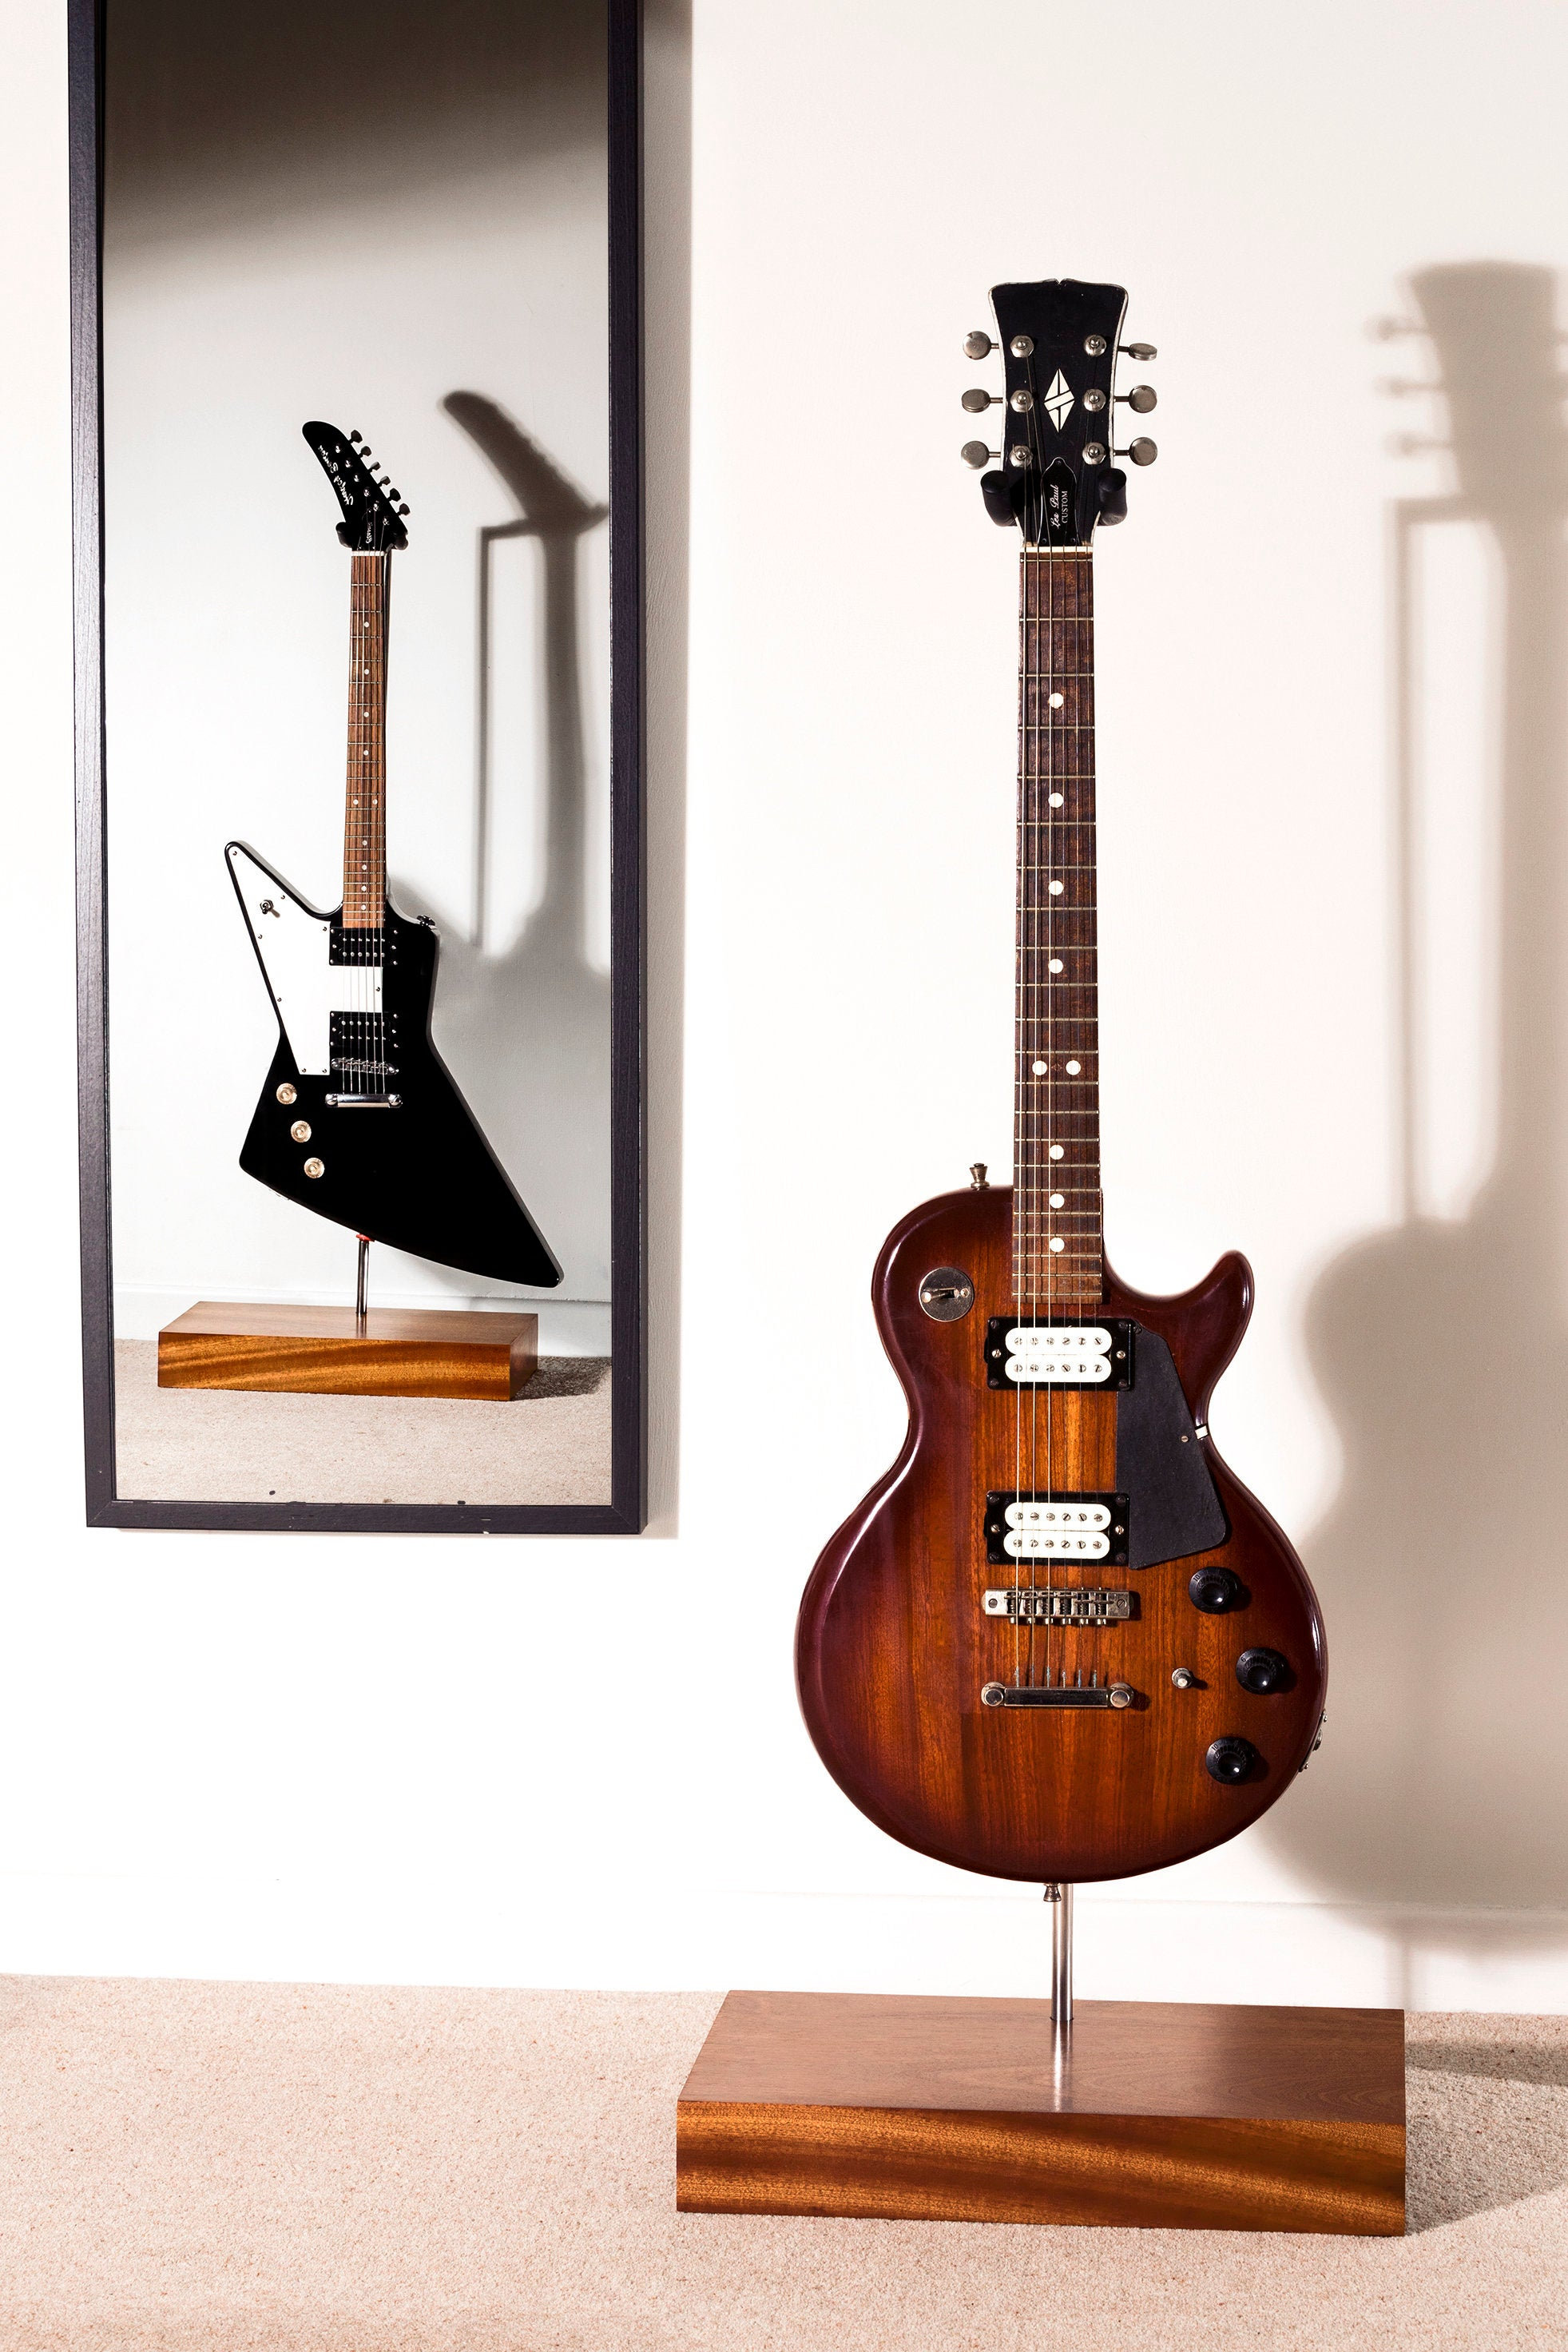 Stainless Steel Guitar Hanger and Guitar Wall Mount Bracket Holder